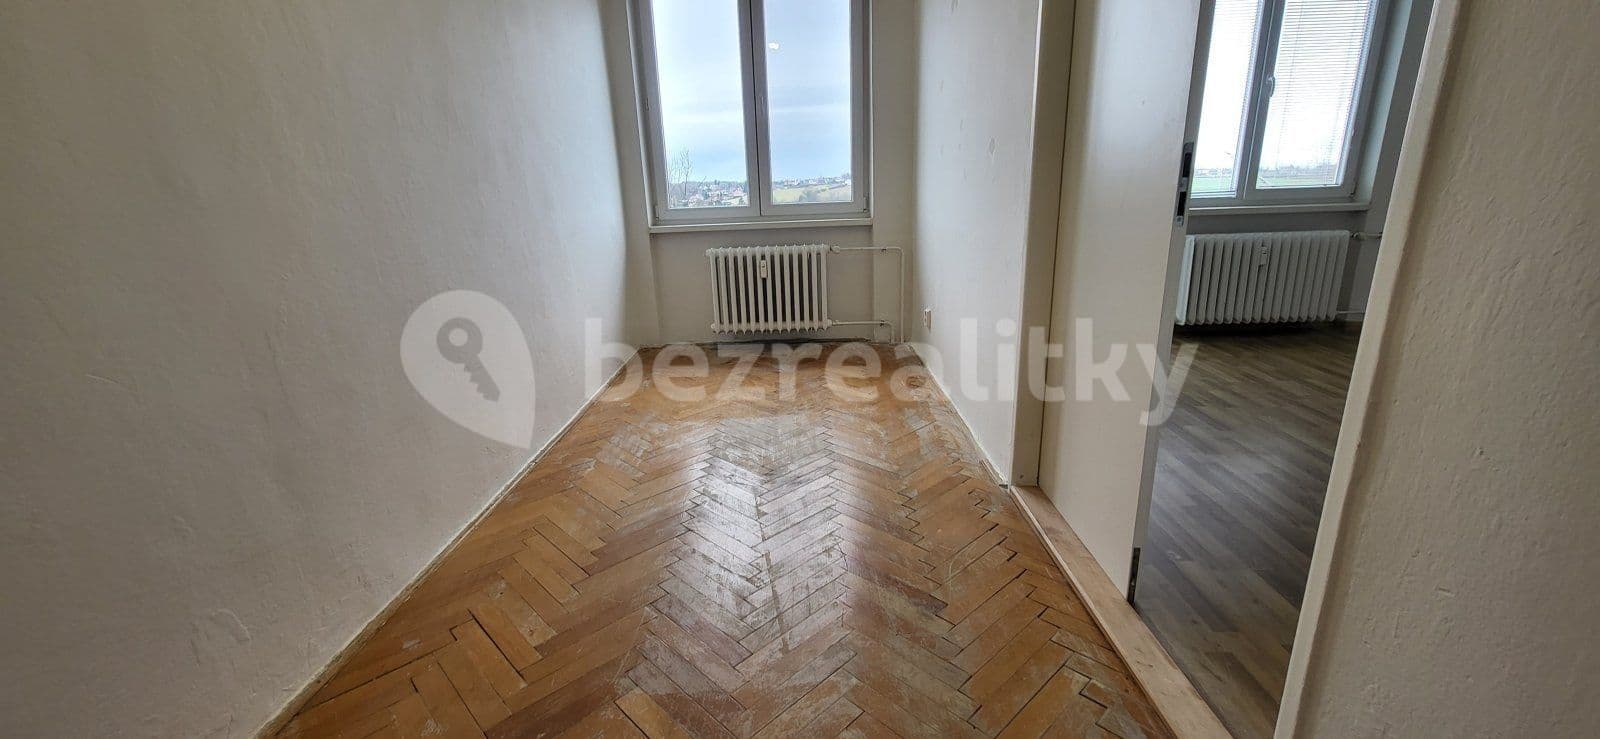 Prenájom bytu 3-izbový 60 m², Na Nábřeží, Havířov, Moravskoslezský kraj